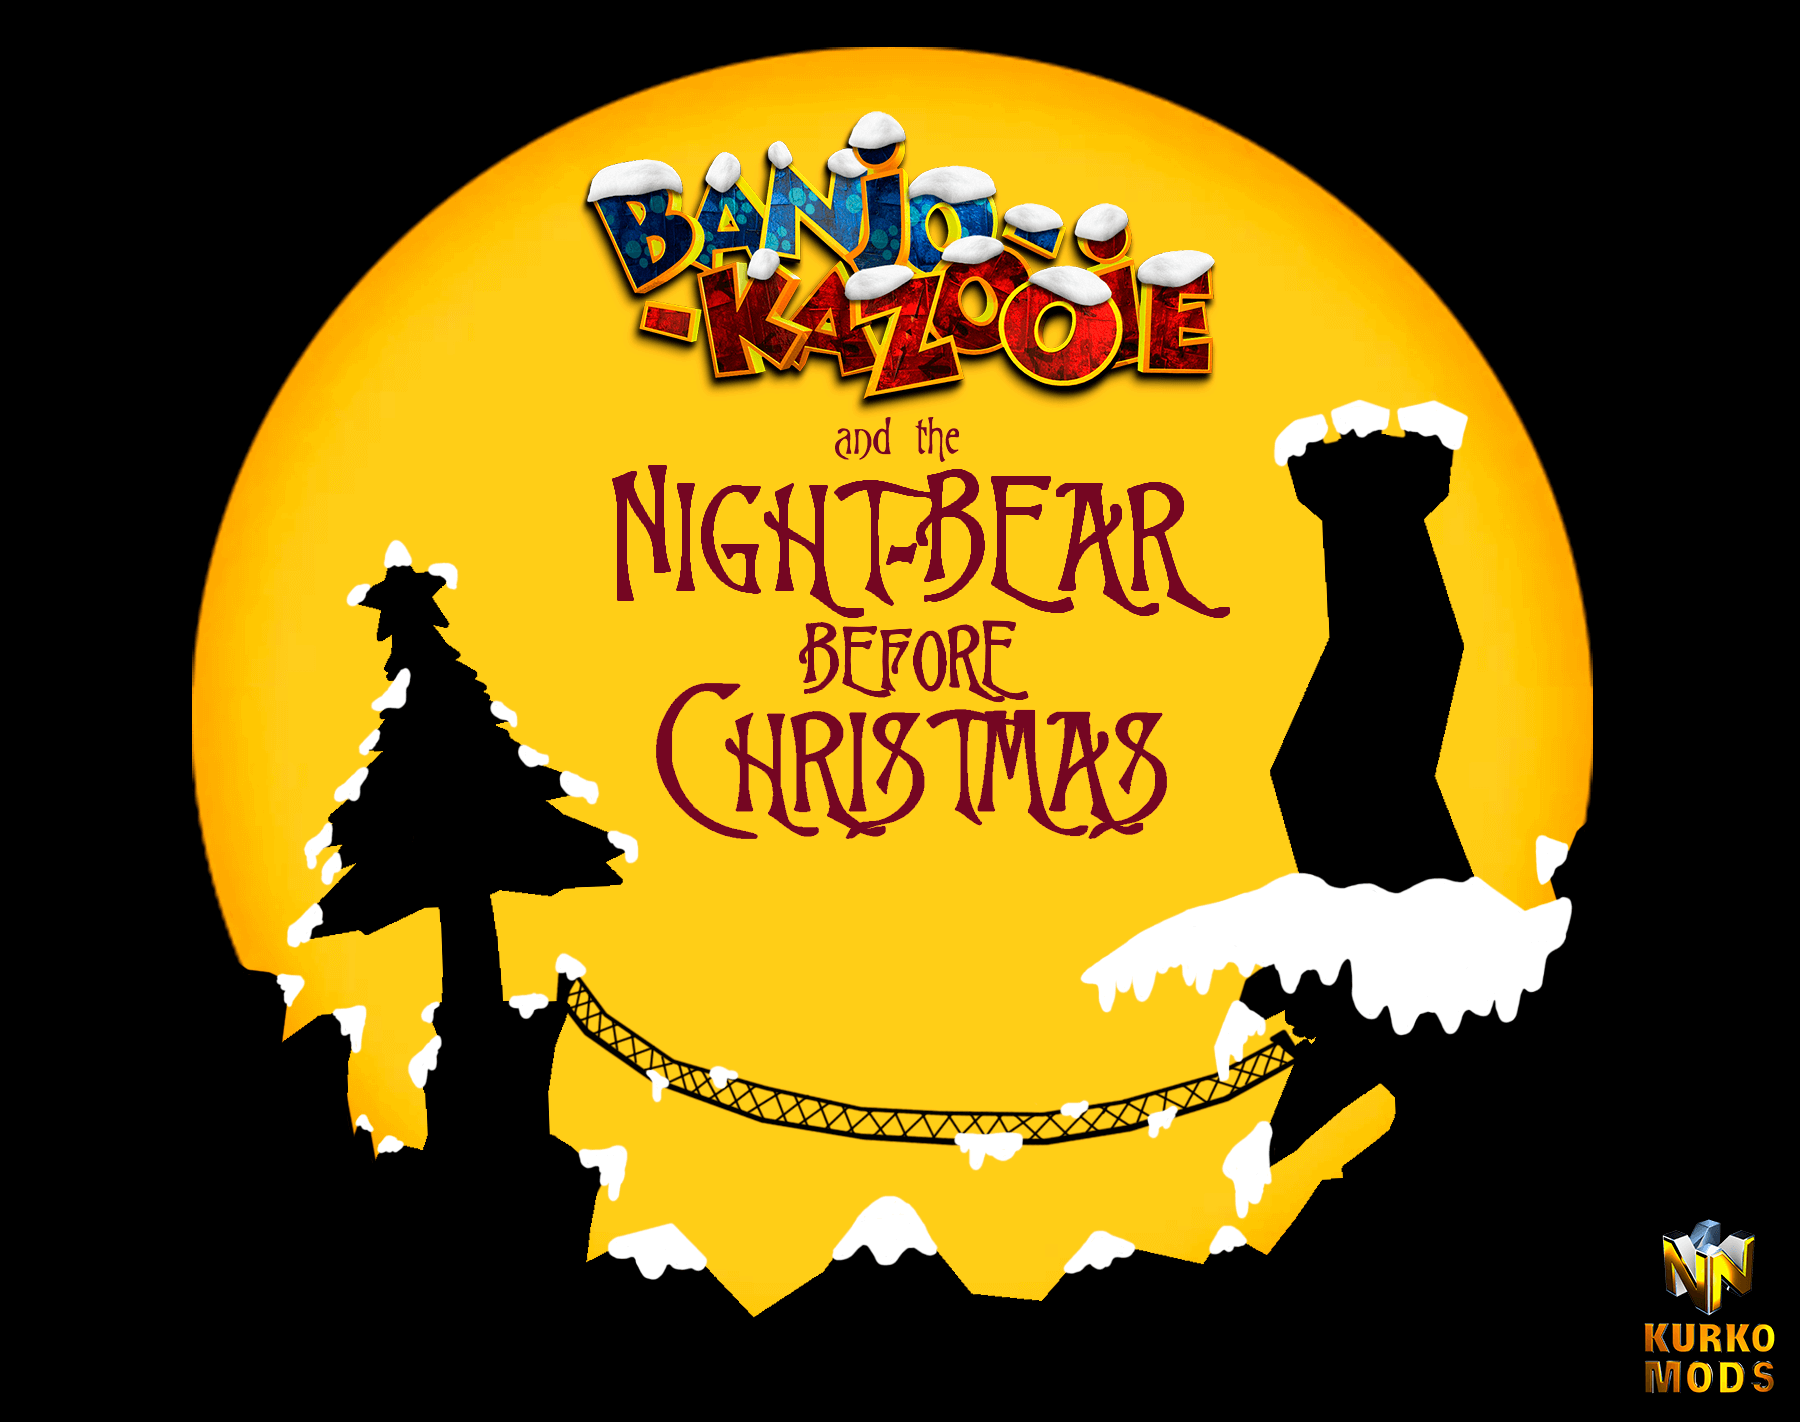 Banjo-Kazooie Nightbear Before Christmas